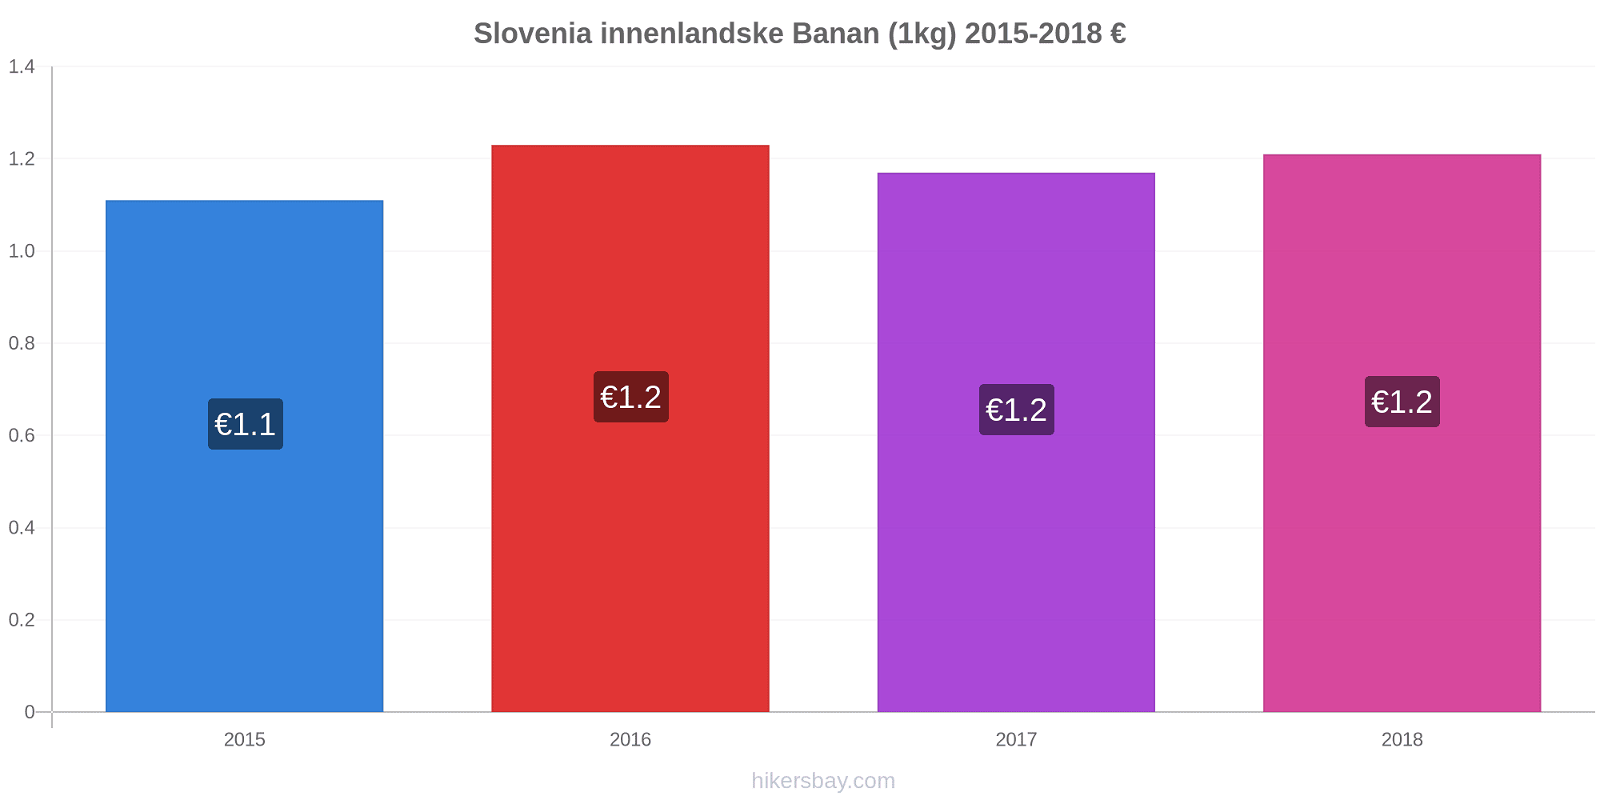 Slovenia innenlandske prisendringer Banan (1kg) hikersbay.com